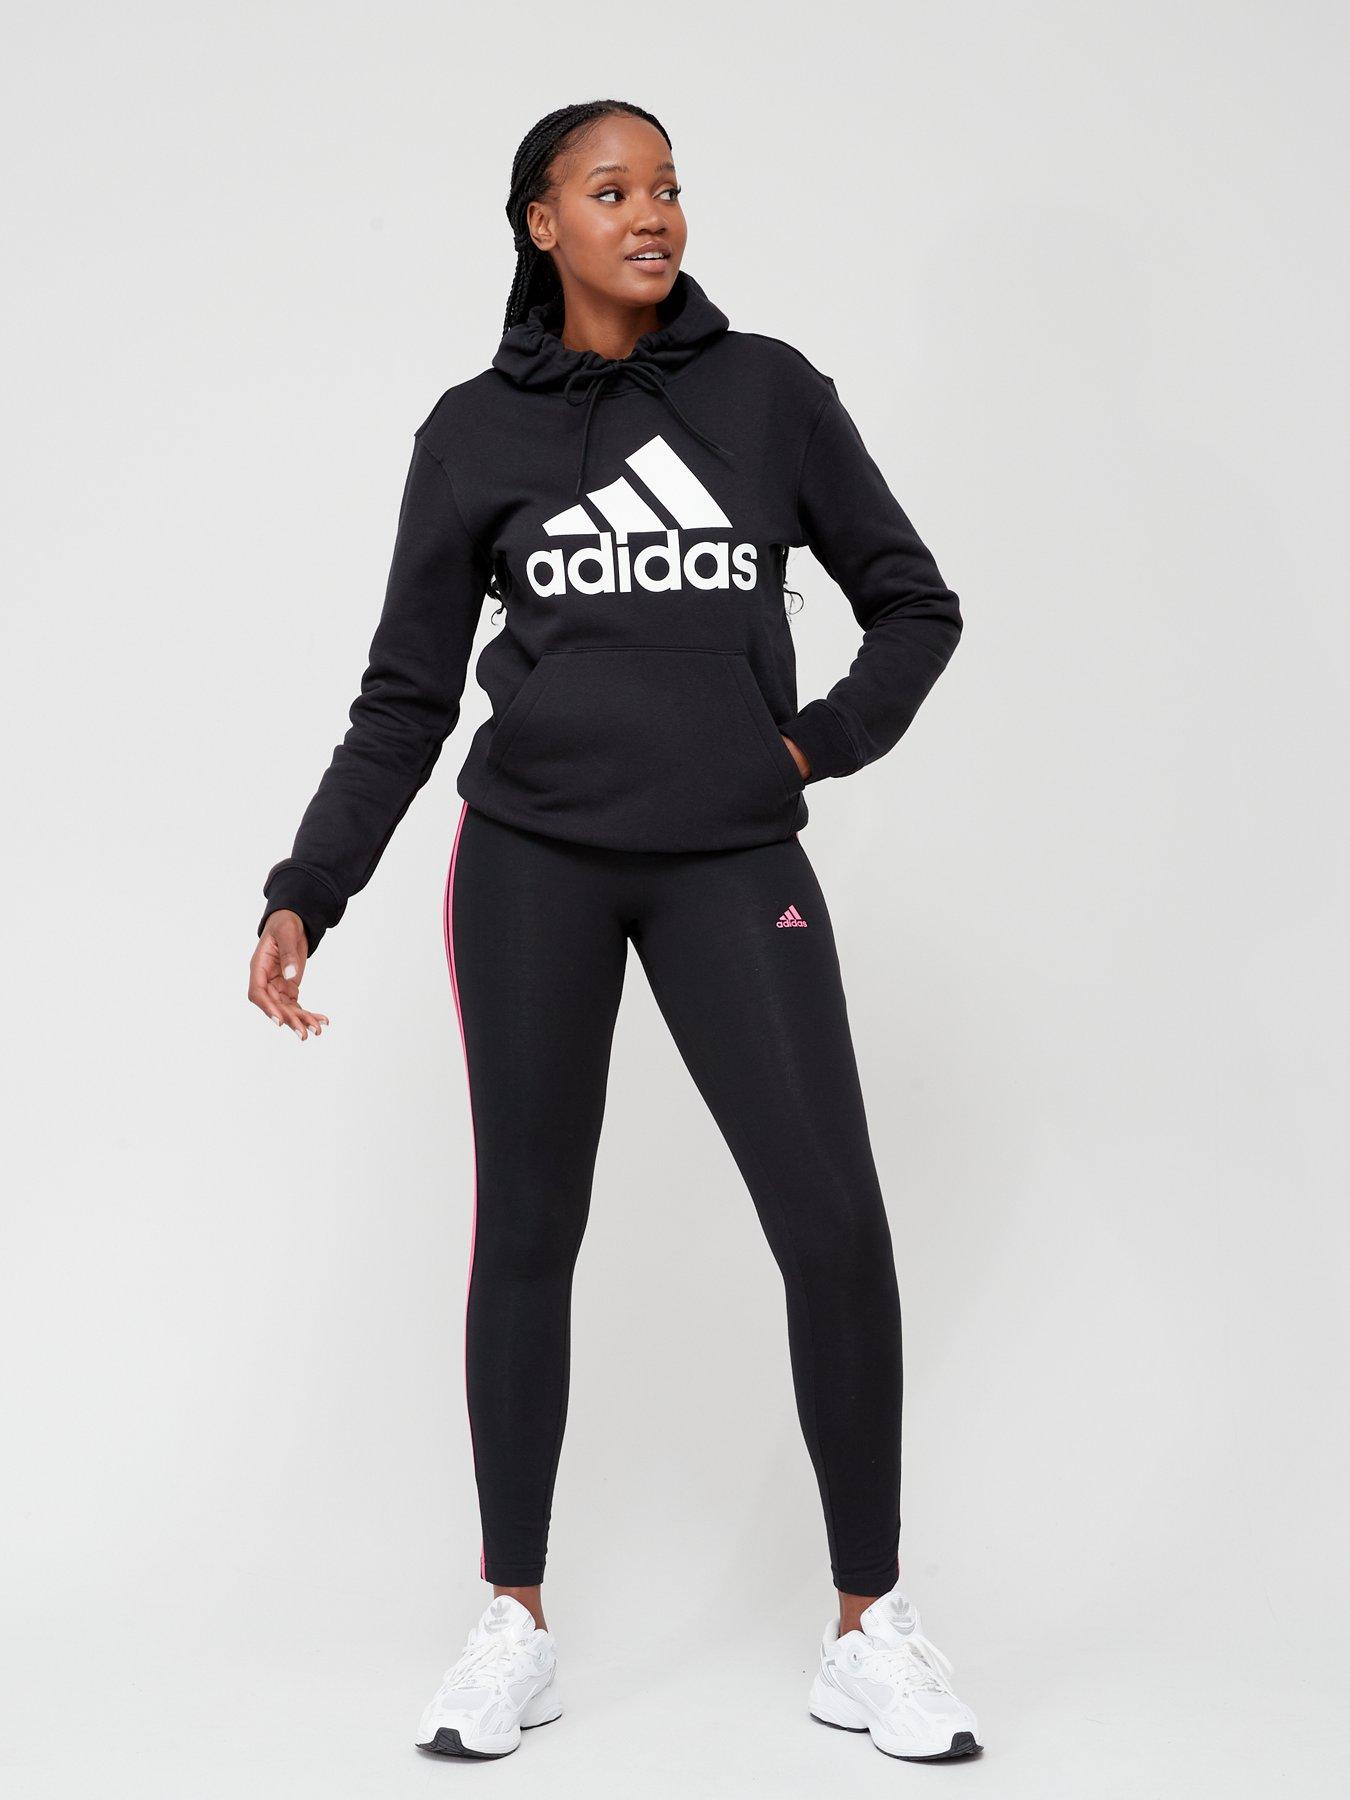 adidas Sportswear Womens 3 Stripe Leggings - Black/Pink